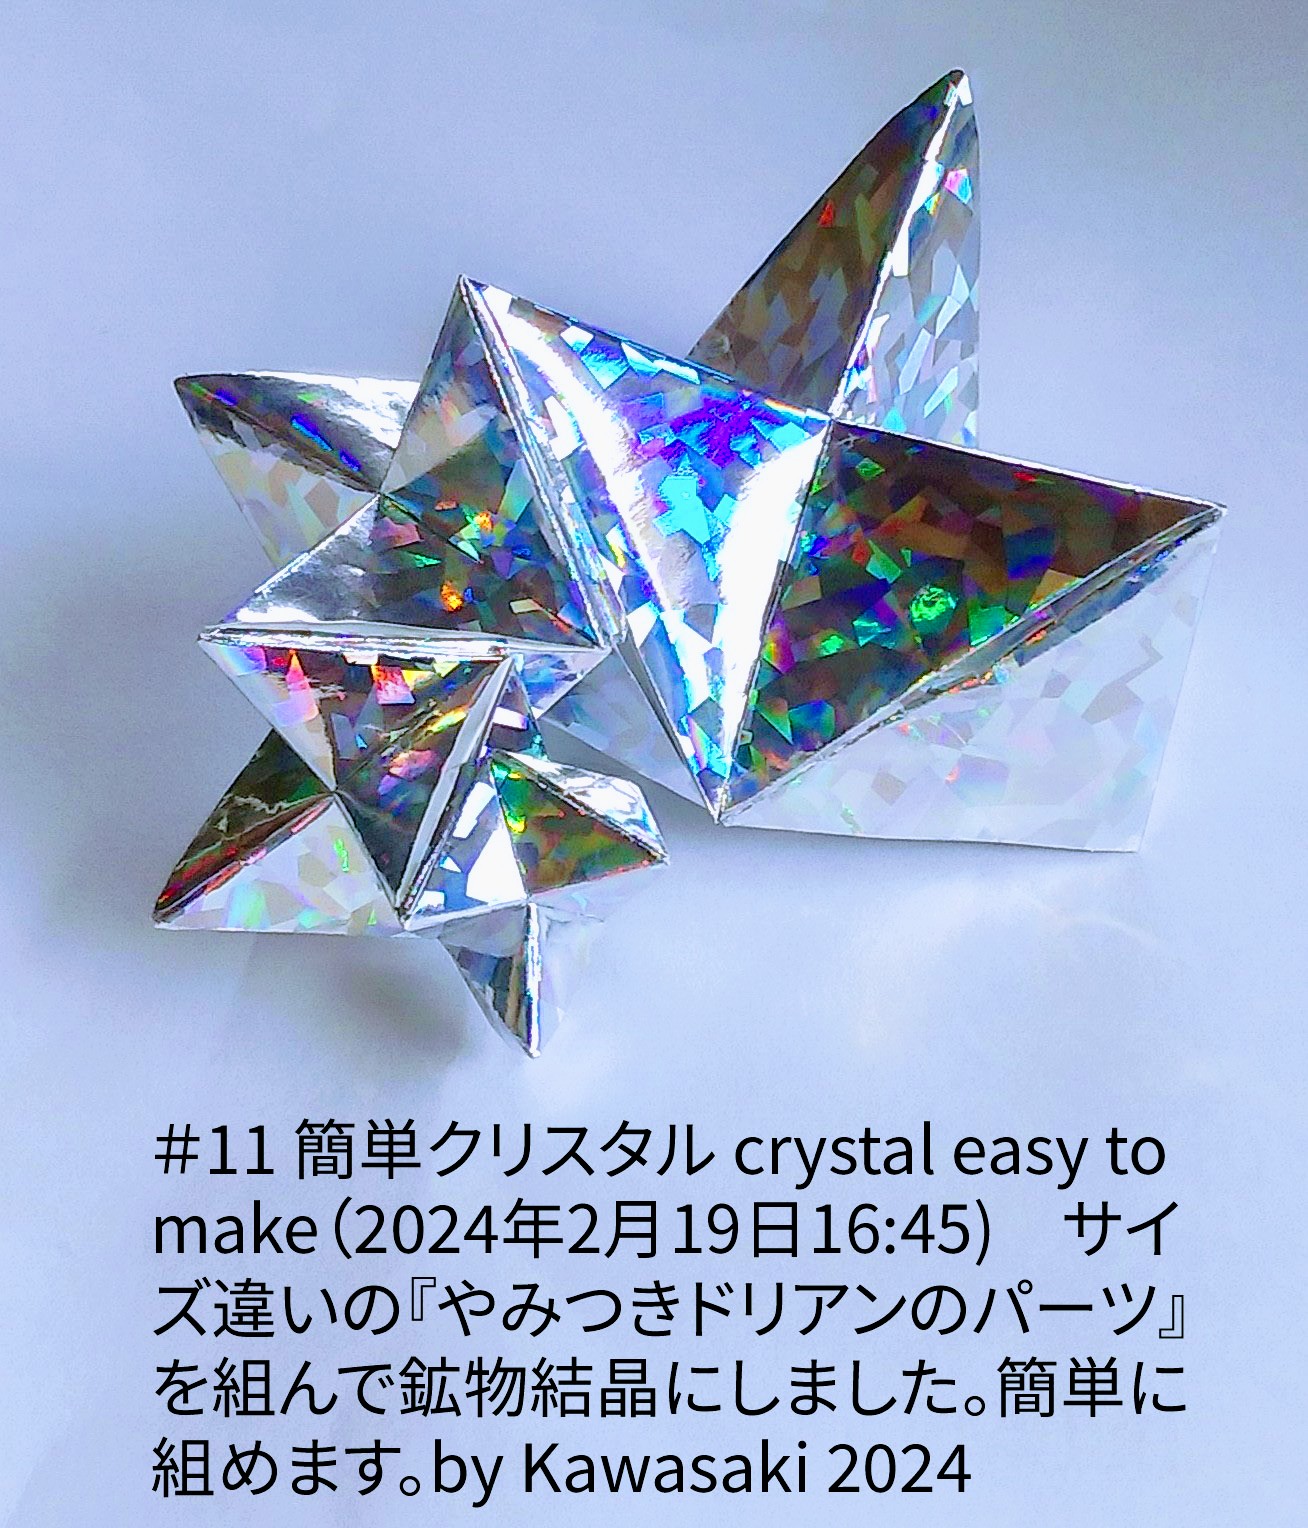 2024/02/19(Mon) 17:14「＃11 簡単クリスタル crystal easy to make（2024年2月19日16:45)」川崎敏和 T.Kawasaki
（創作者 Author：川崎敏和 T.Kawasaki,　製作者 Folder：川崎敏和 T.Kawasaki ,　出典 Source：2024年川崎敏和折り紙キット＃11）
 サイズ違いの『やみつきドリアンのパーツ』を組んで鉱物結晶にしました。簡単に組めます。by Kawasaki 2024